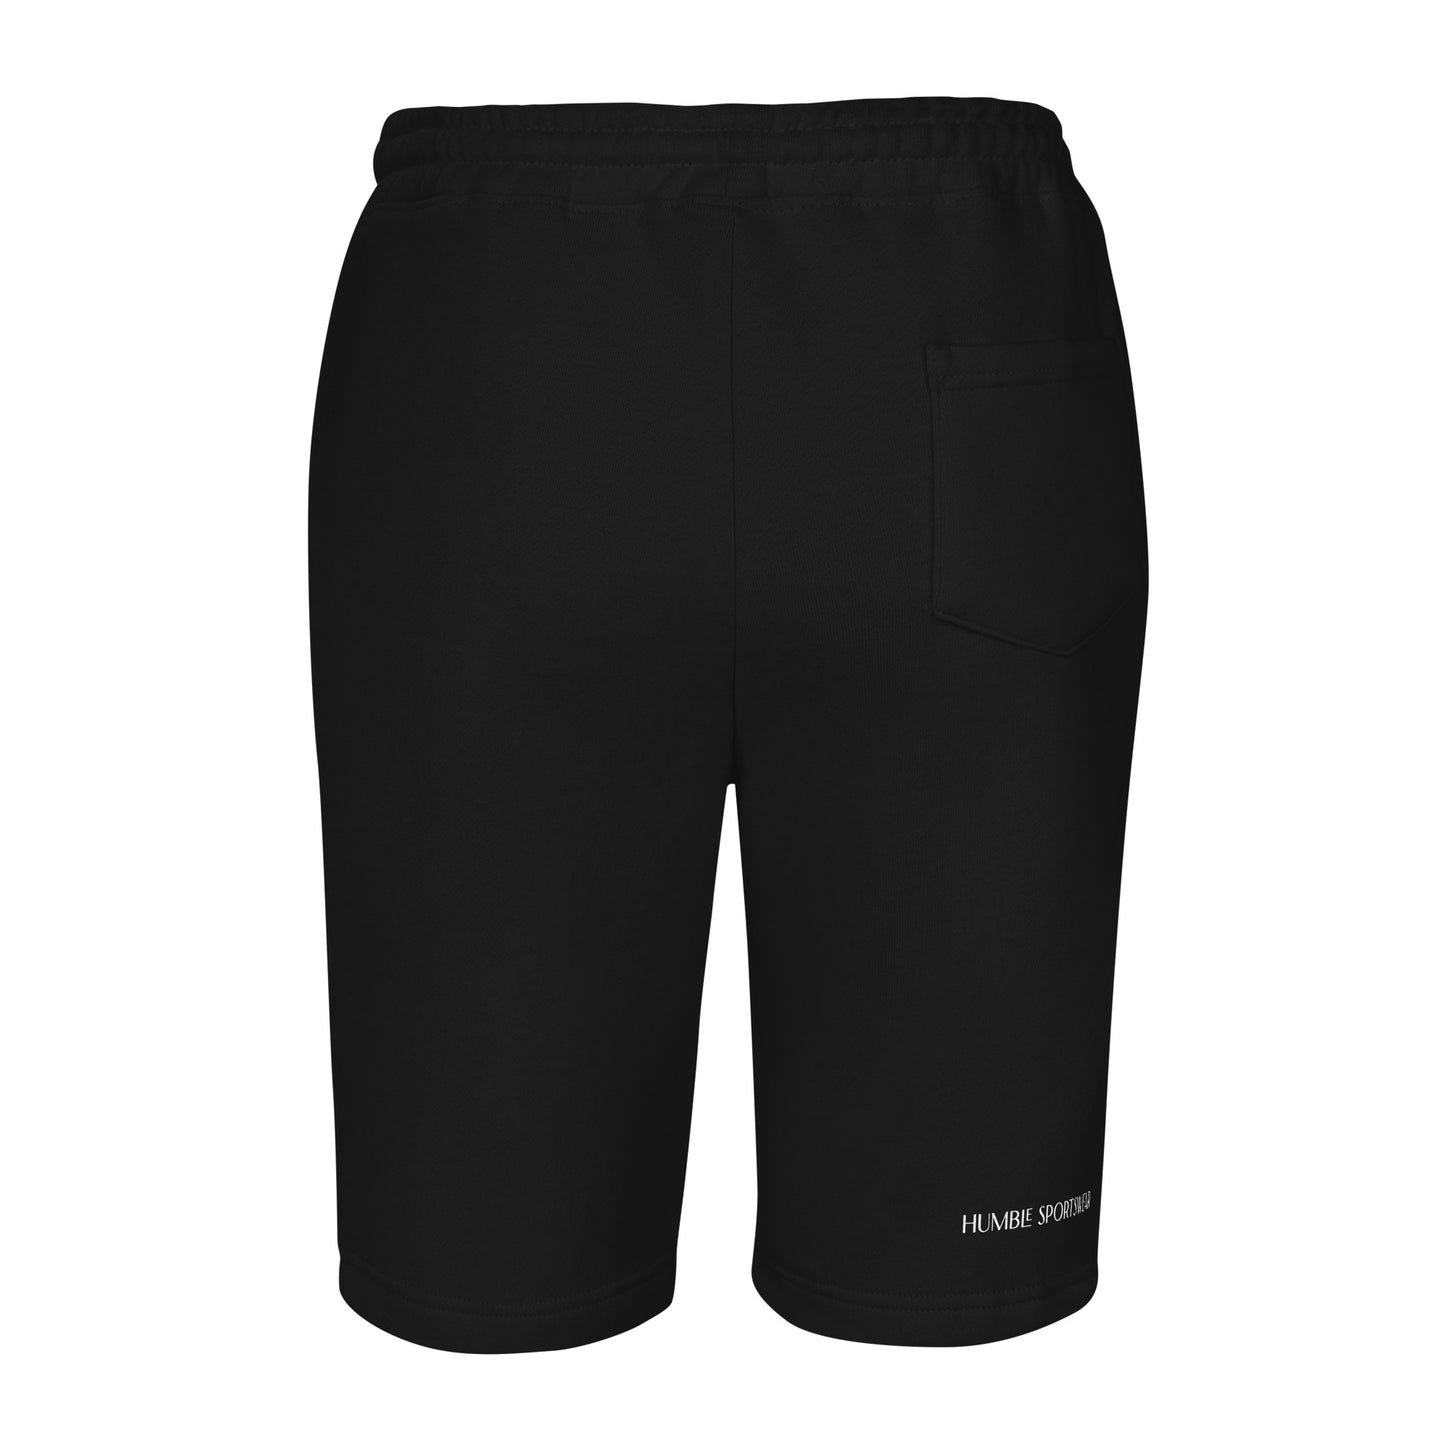 Humble Sportswear, men's fleece active and casual wear shorts black 